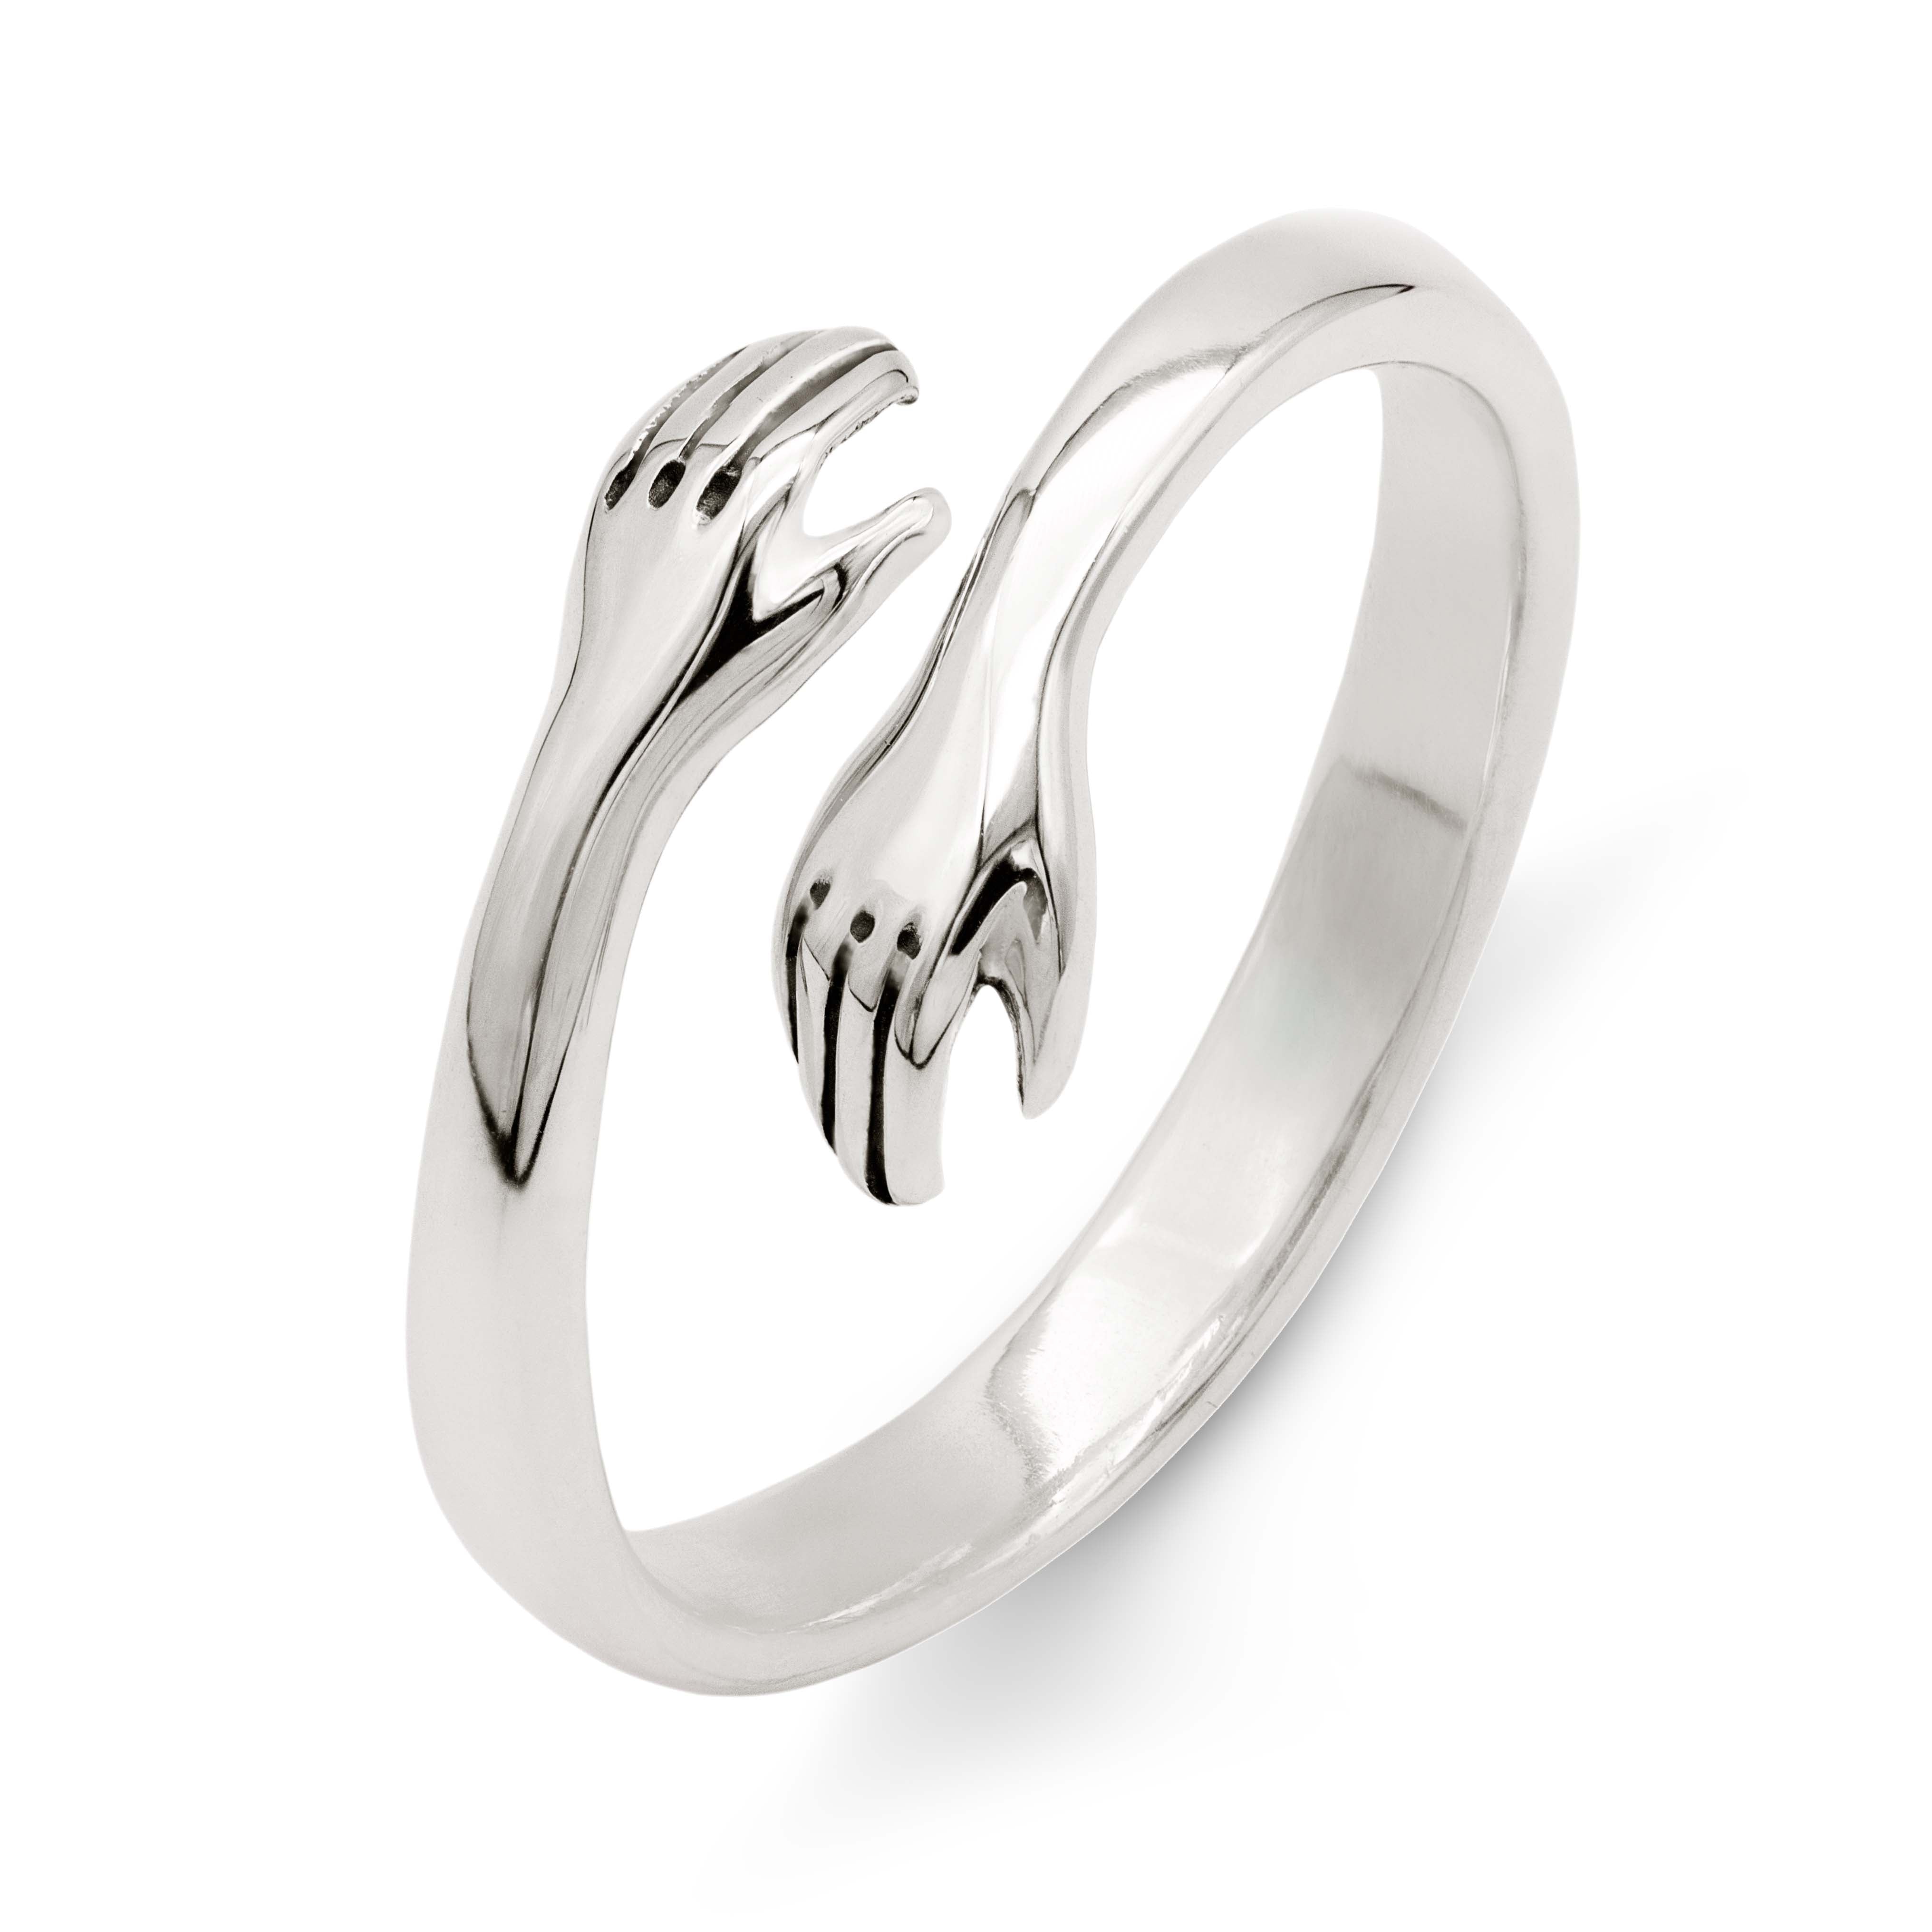 Stainless Steel Hug Ring Color Silver & Black For Unisex Pack Of 2 | eBay